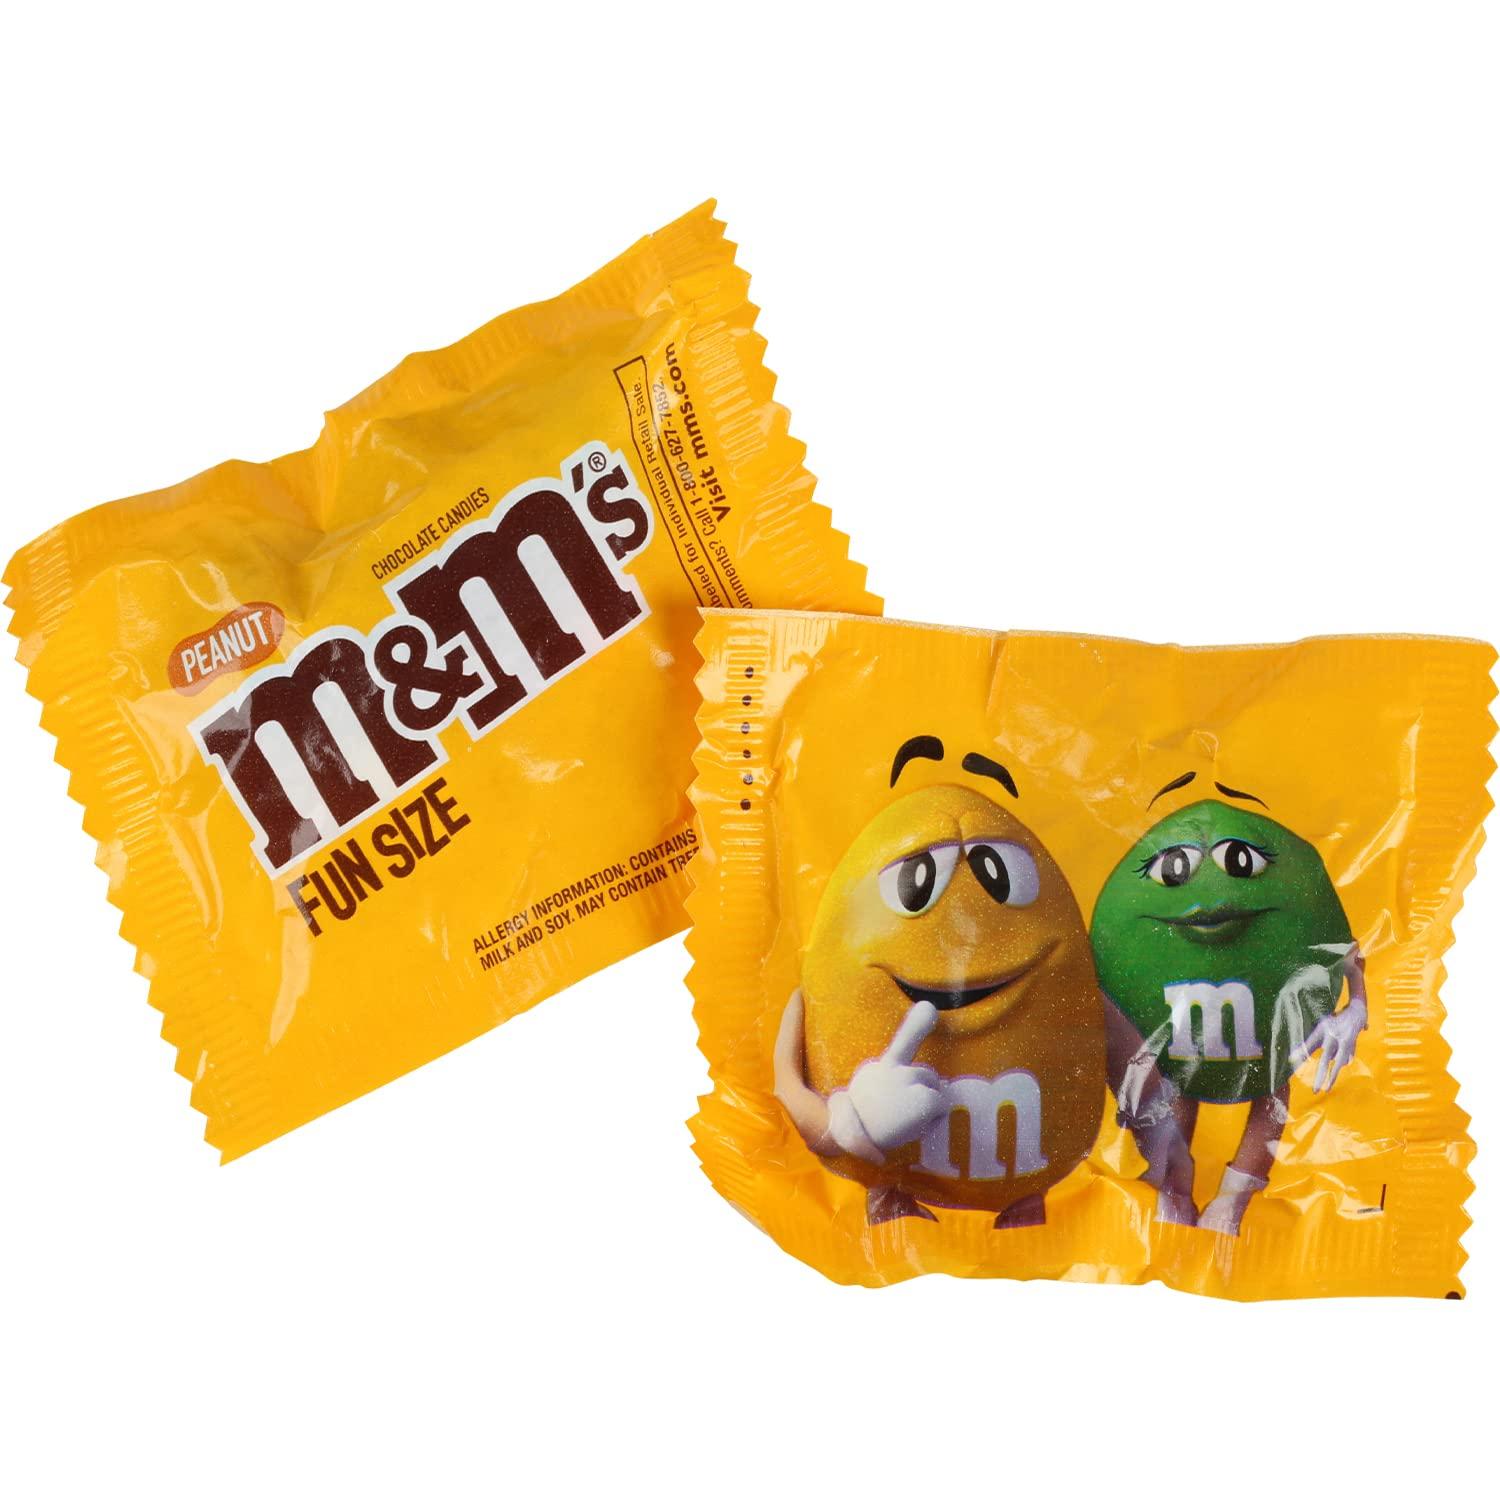  Yellow Milk Chocolate M&M's Candy (1 Pound Bag